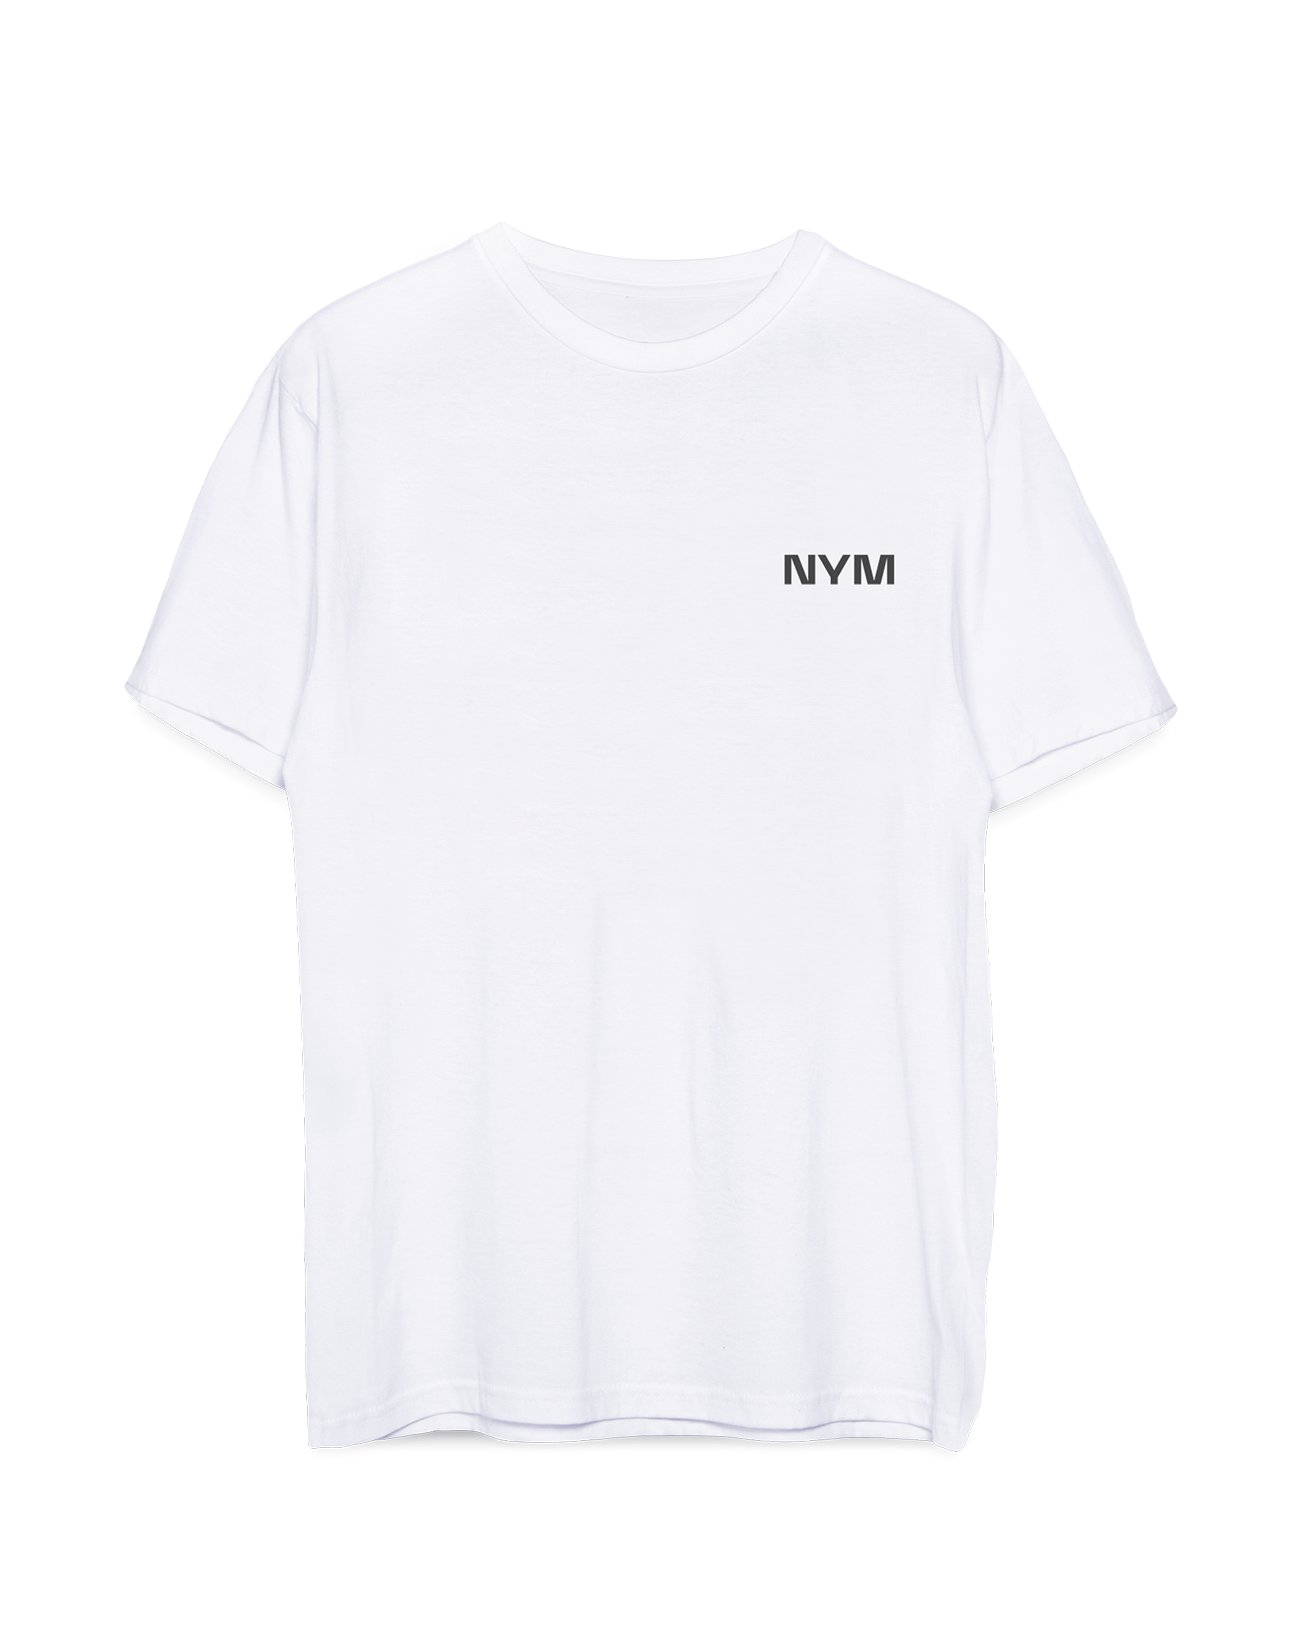 Return of Privacy White Unisex t-shirt